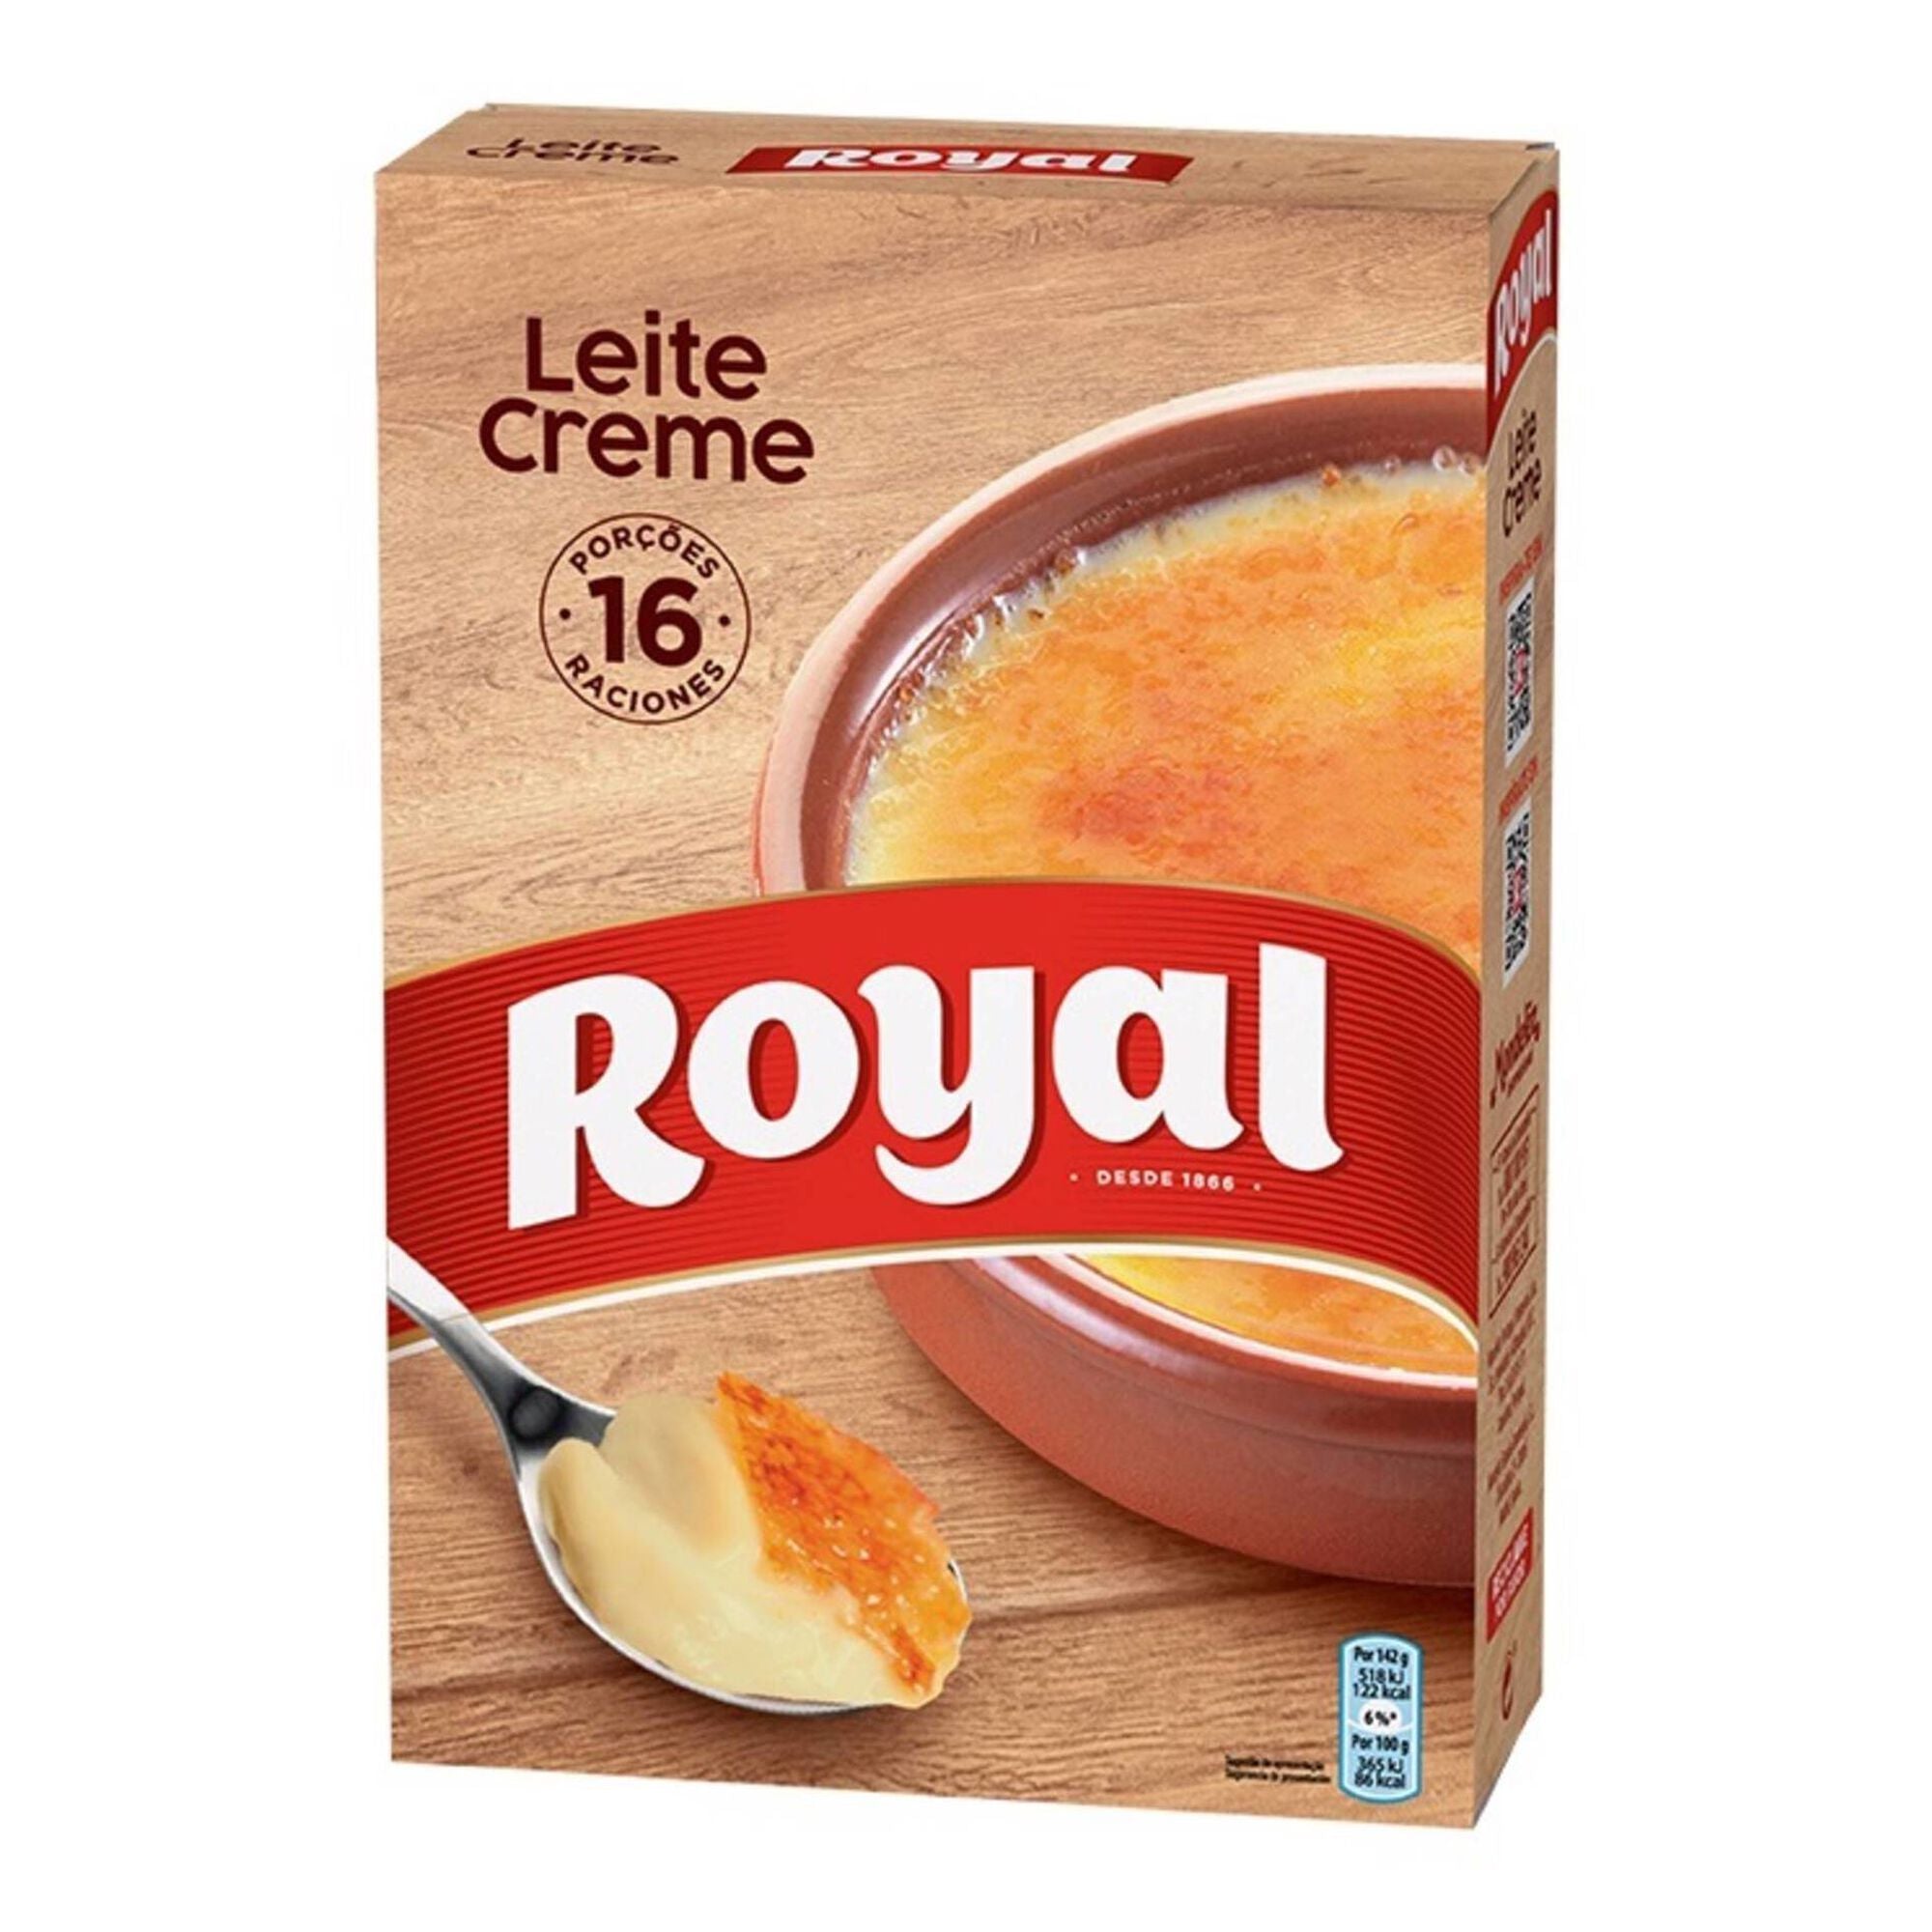 Leite Creme Royal